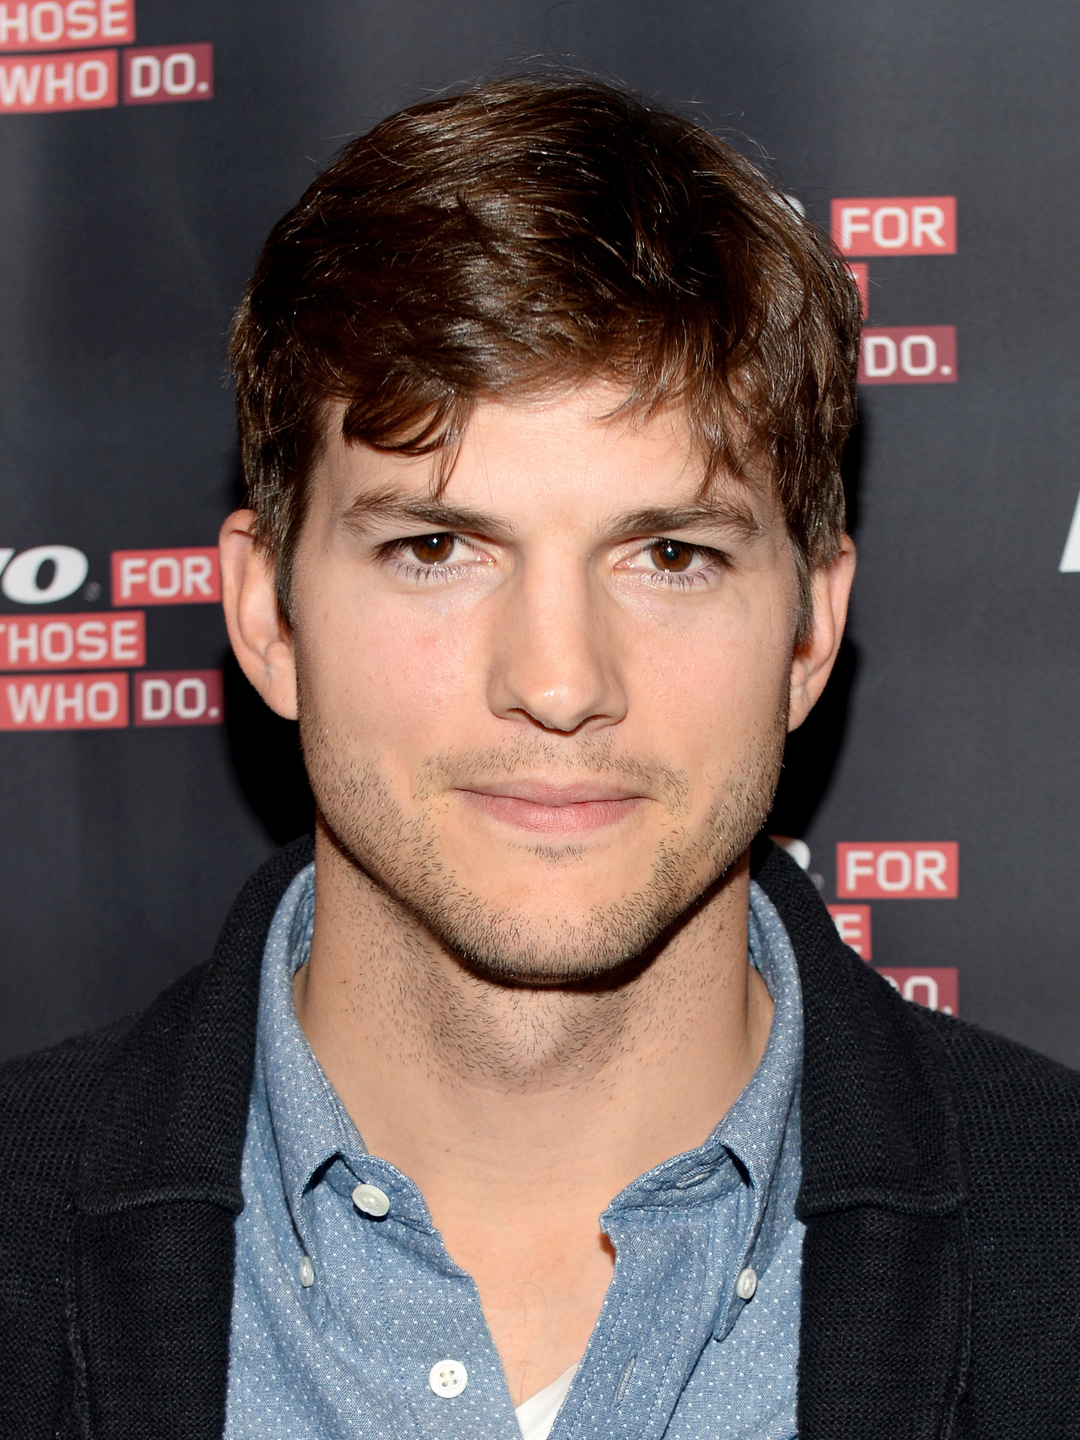 Ashton Kutcher who are his parents